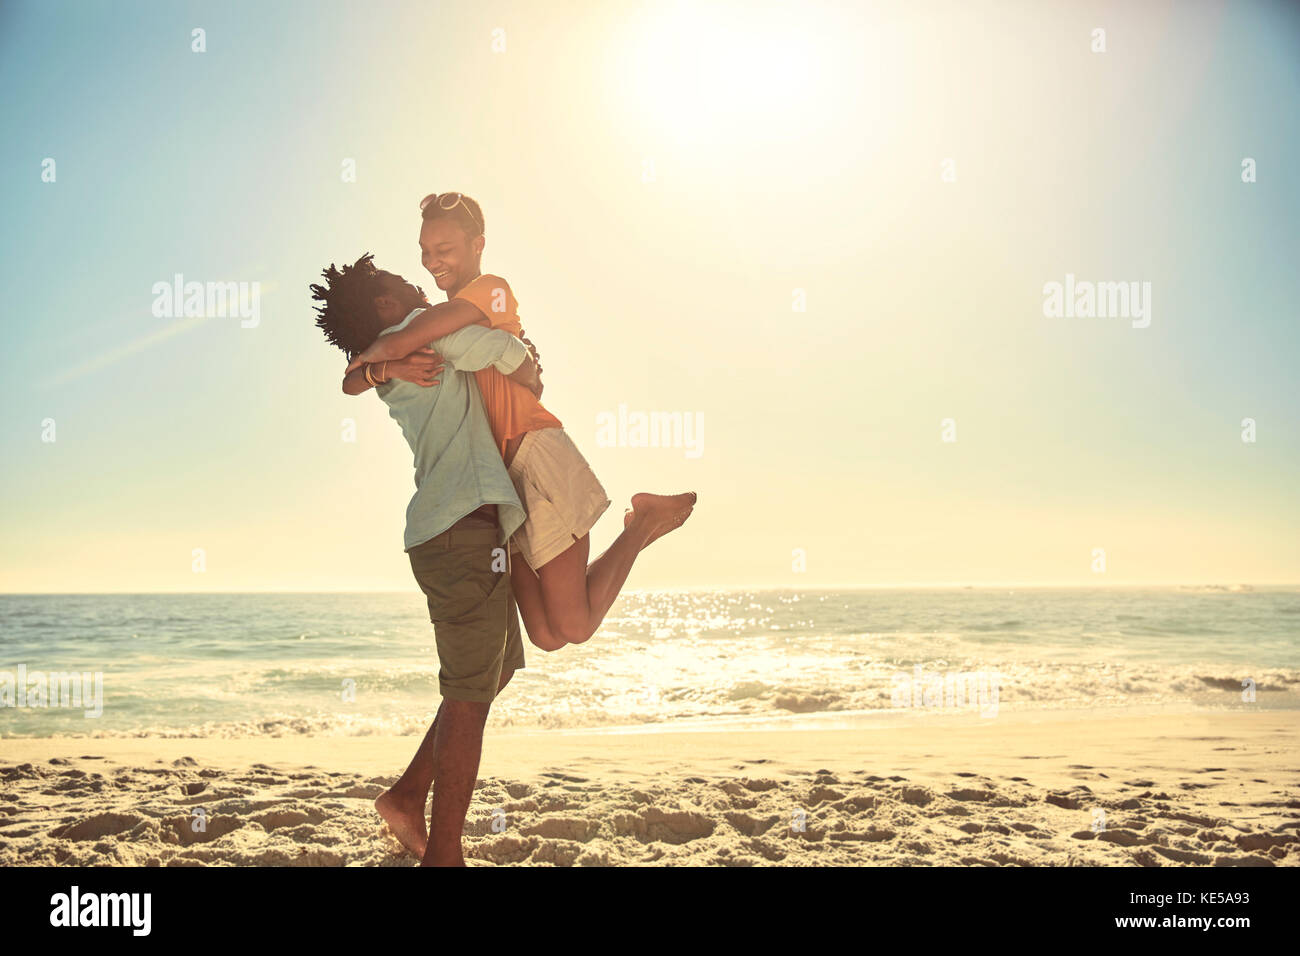 Playful boyfriend lifting girlfriend on sunny summer ocean beach Stock Photo